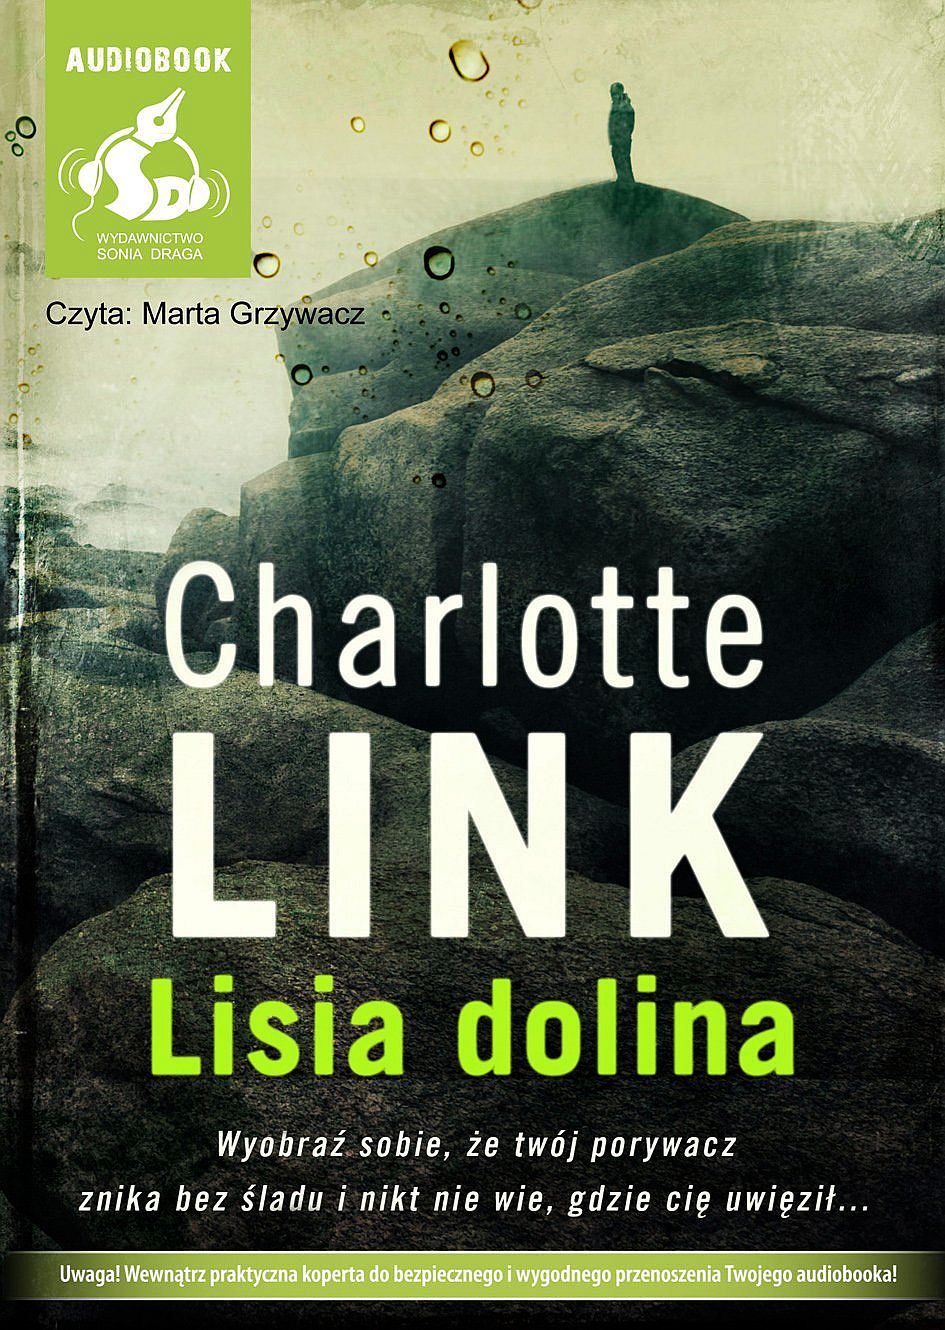 LINK CHARLOTTE - LISIA DOLINA